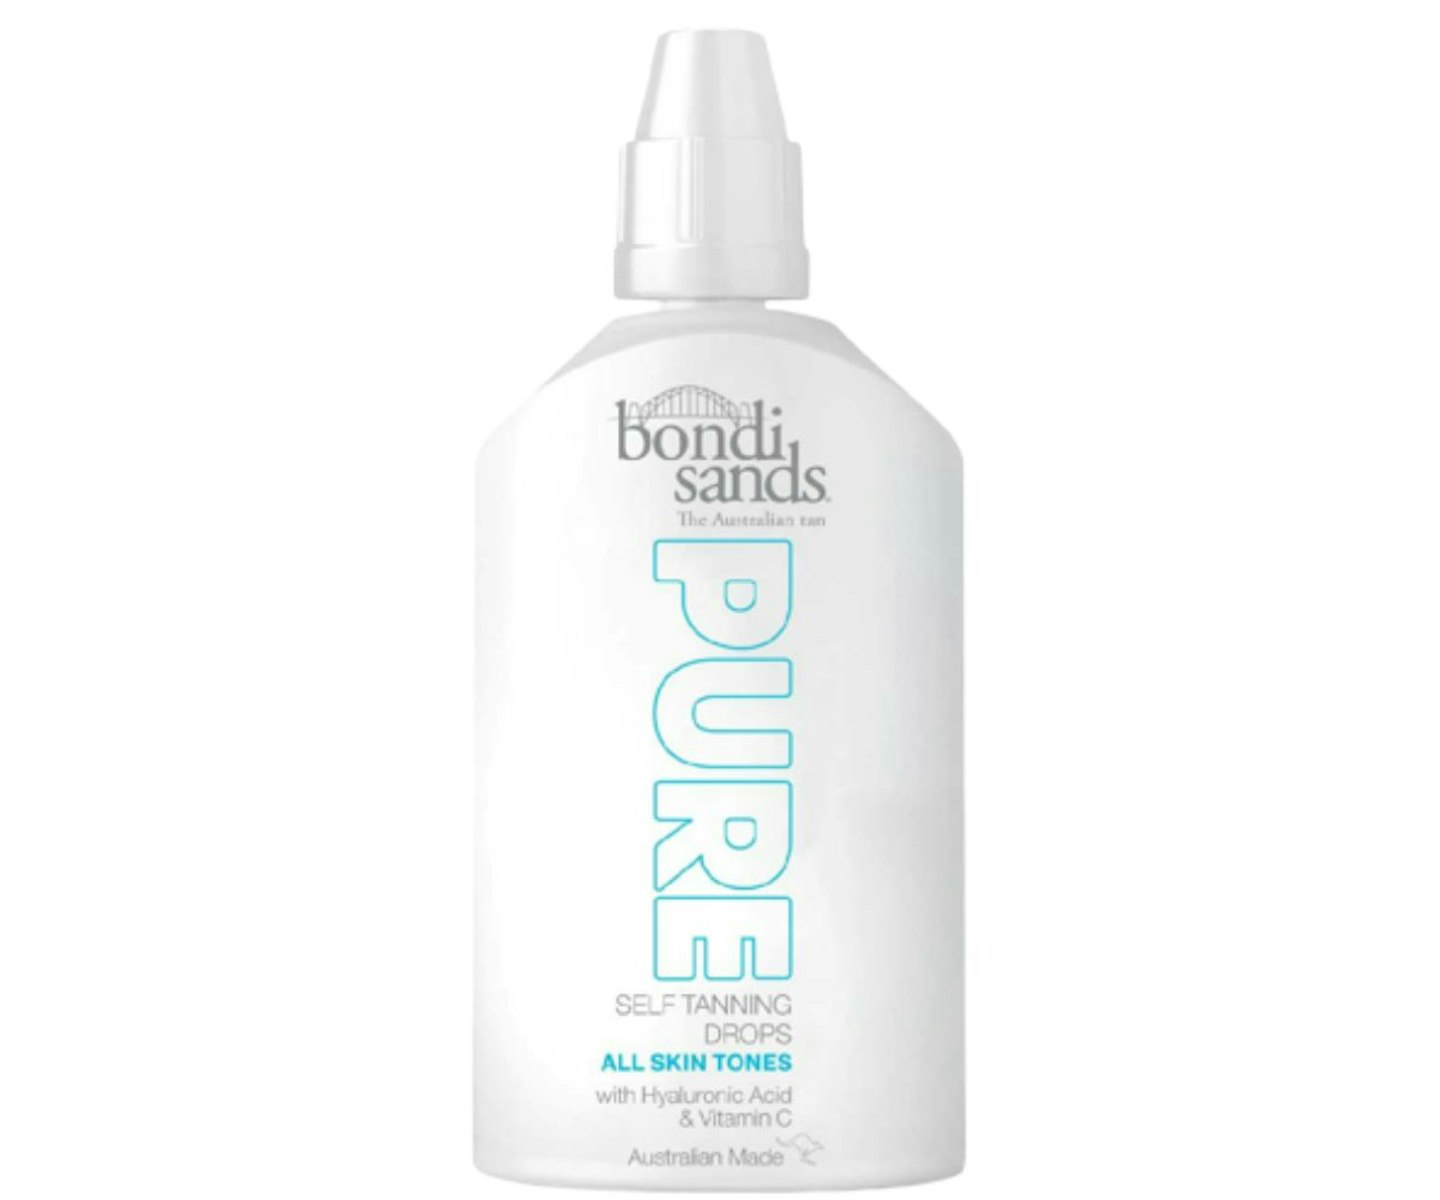 Bondi Sands Pure Concentrated Self Tan Drops